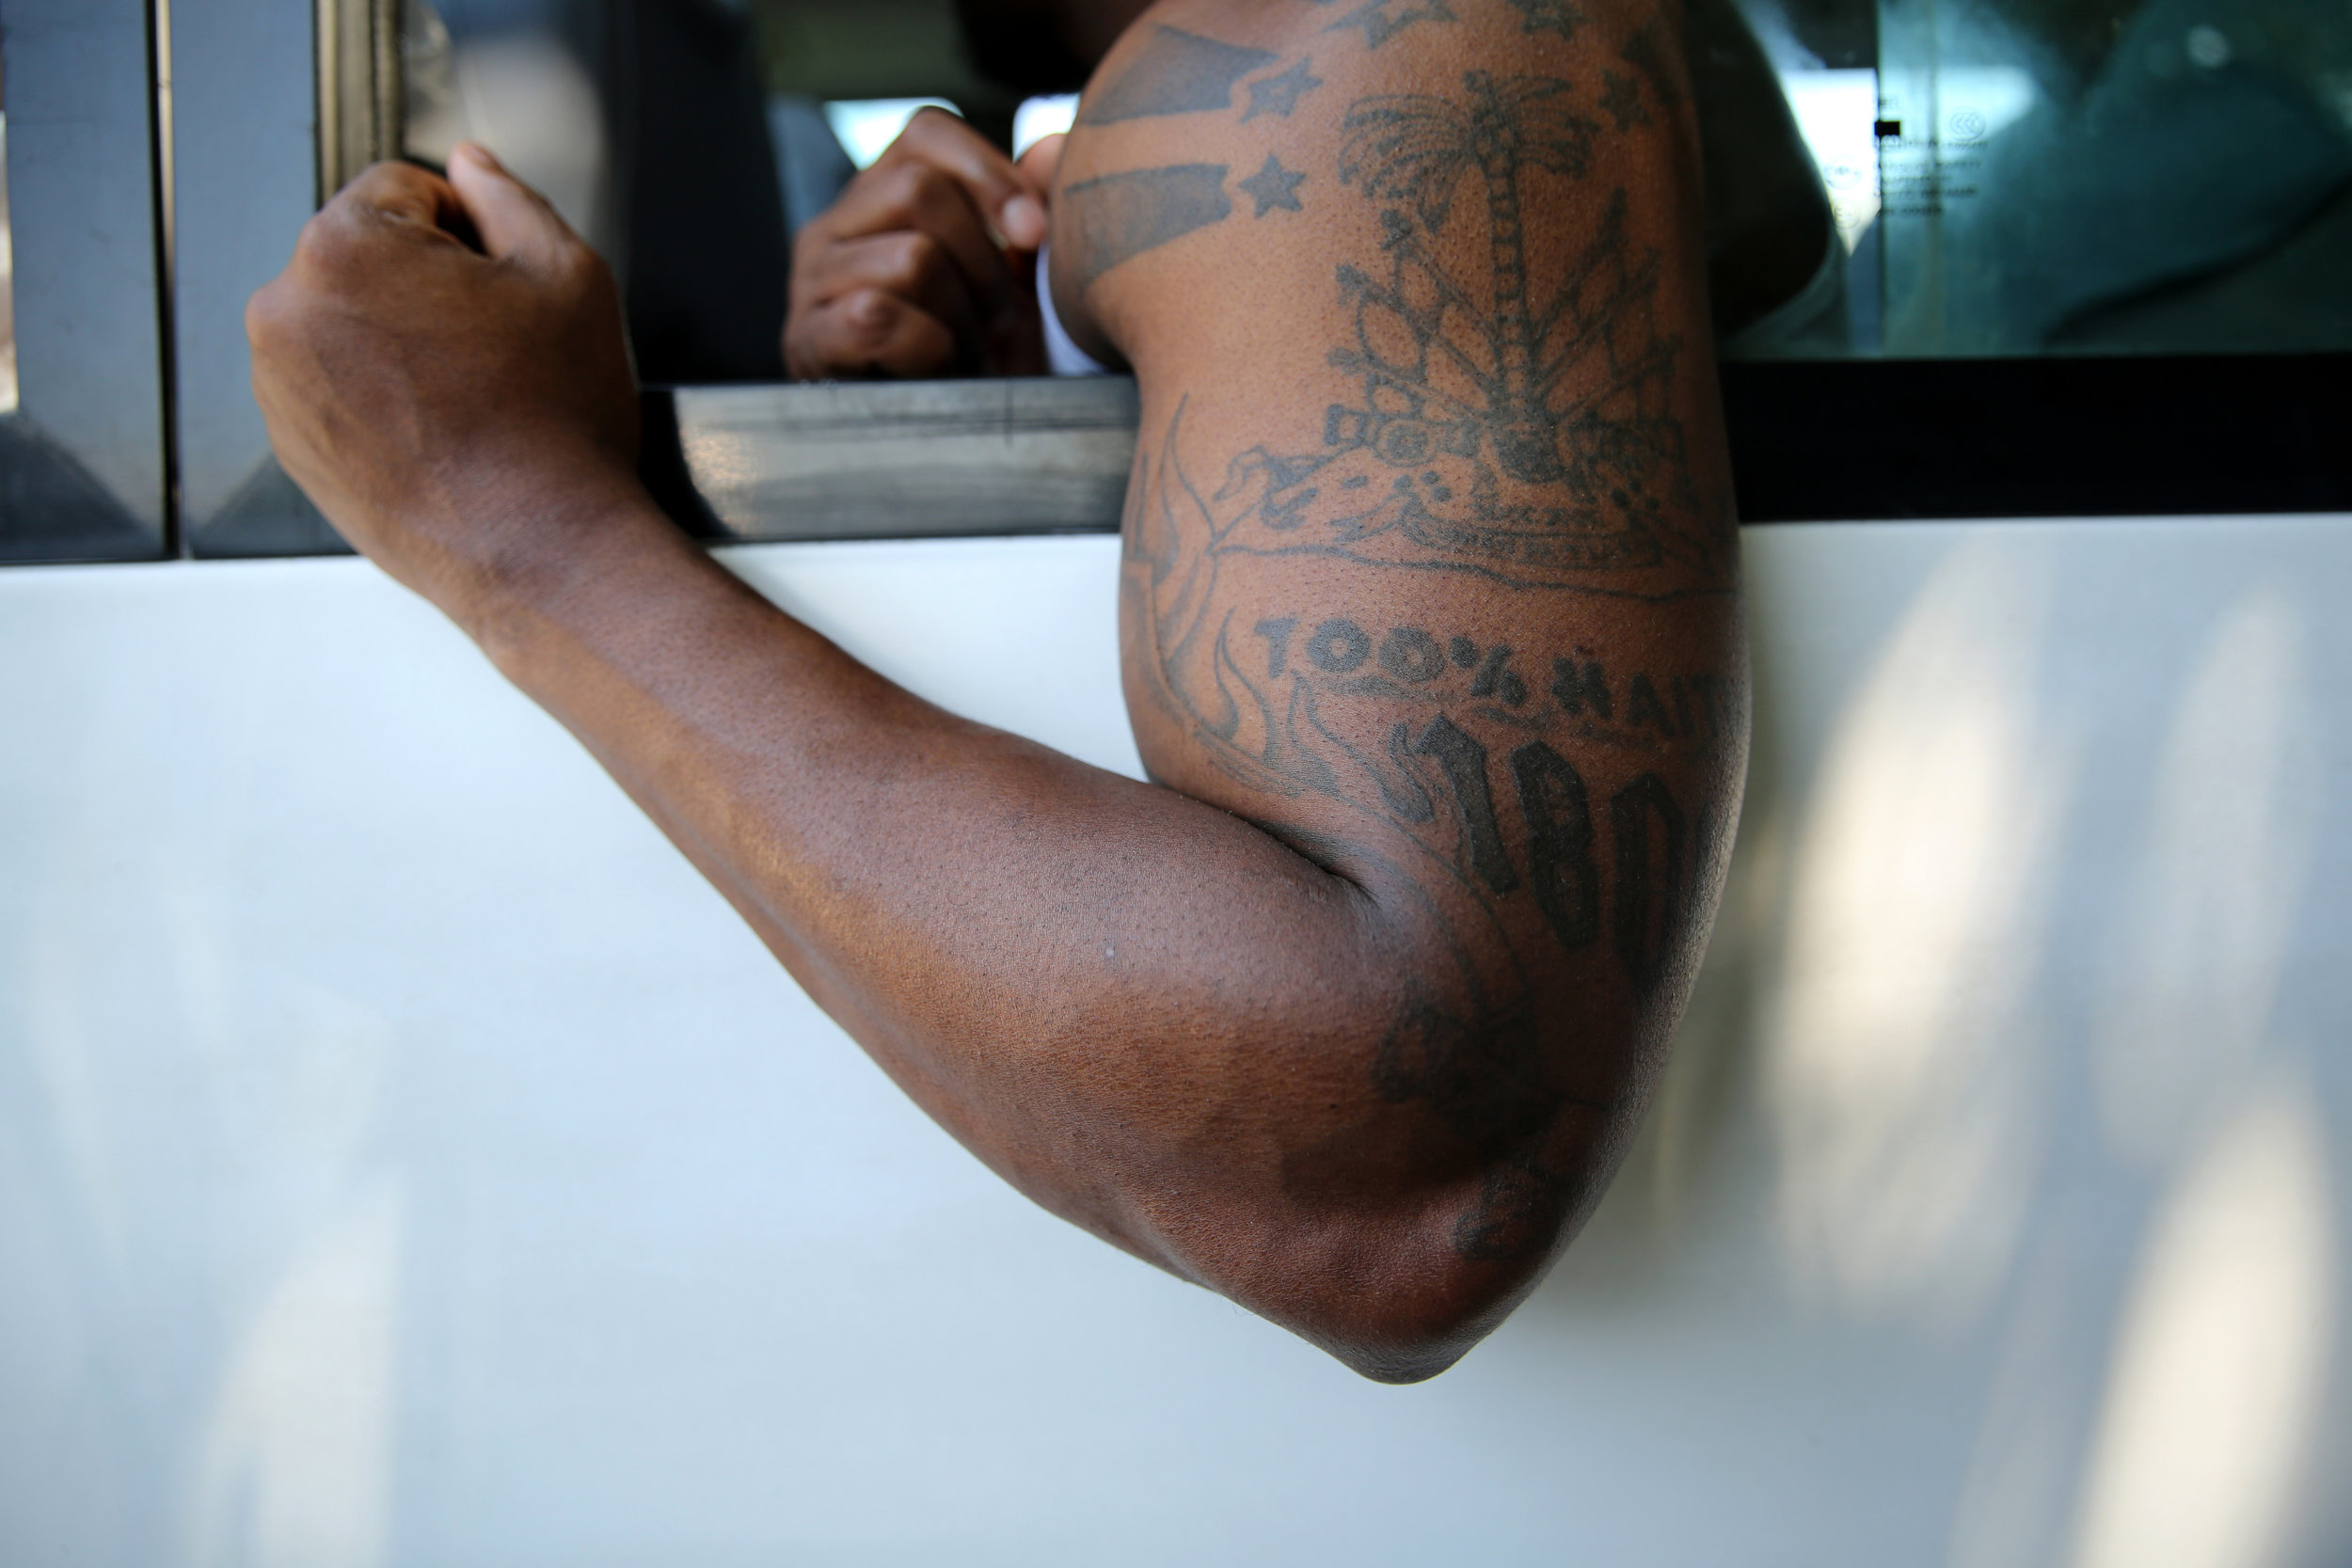 1804 haiti tattoo meaning